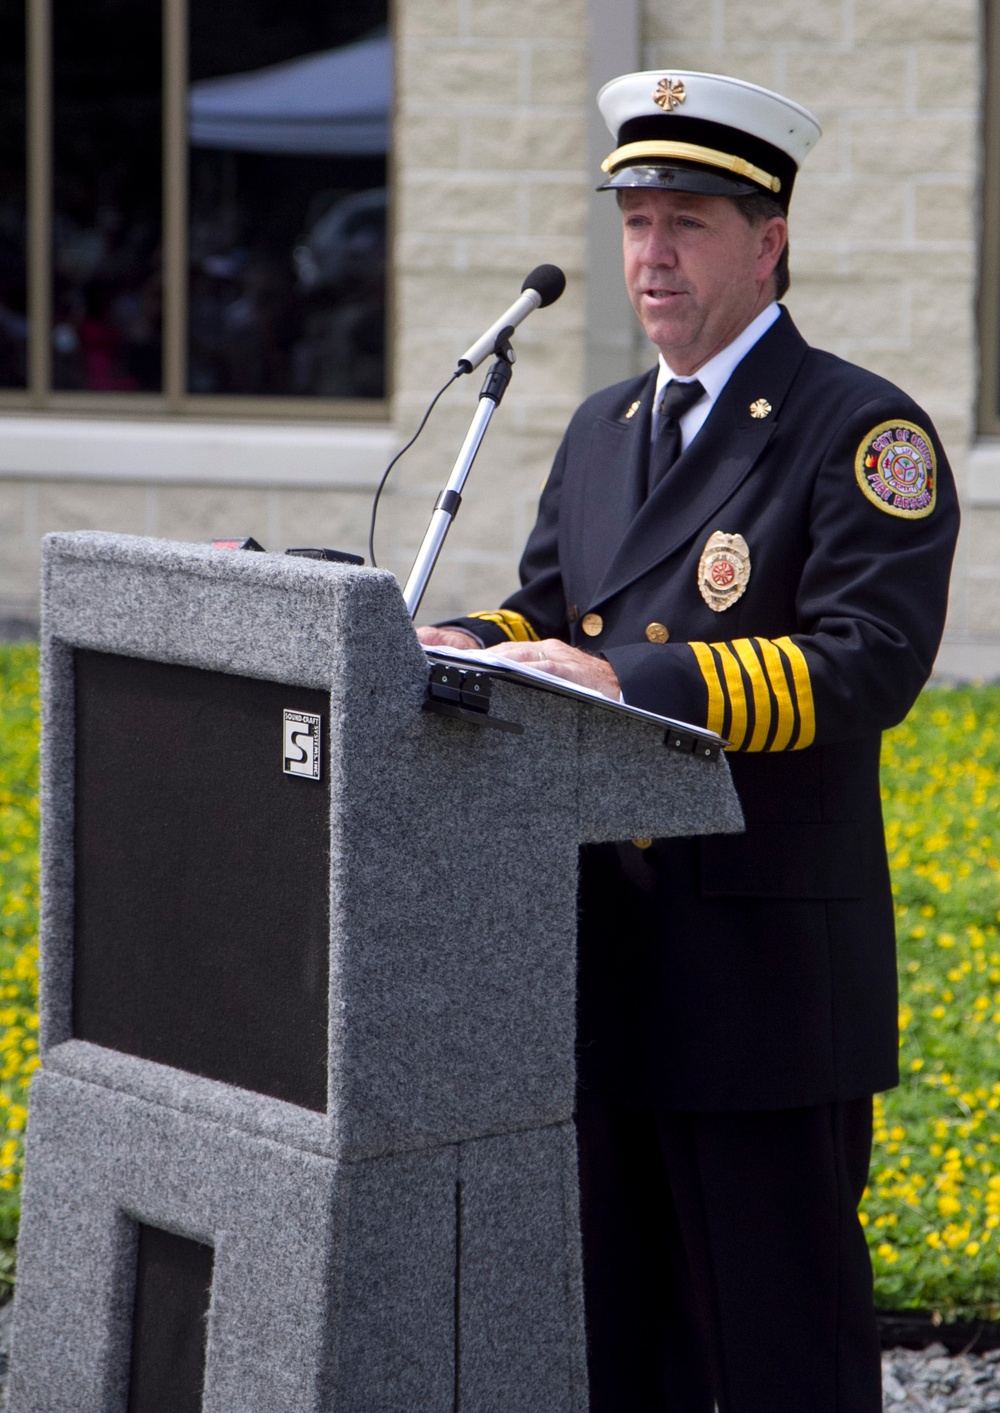 Fire Chief Lars White